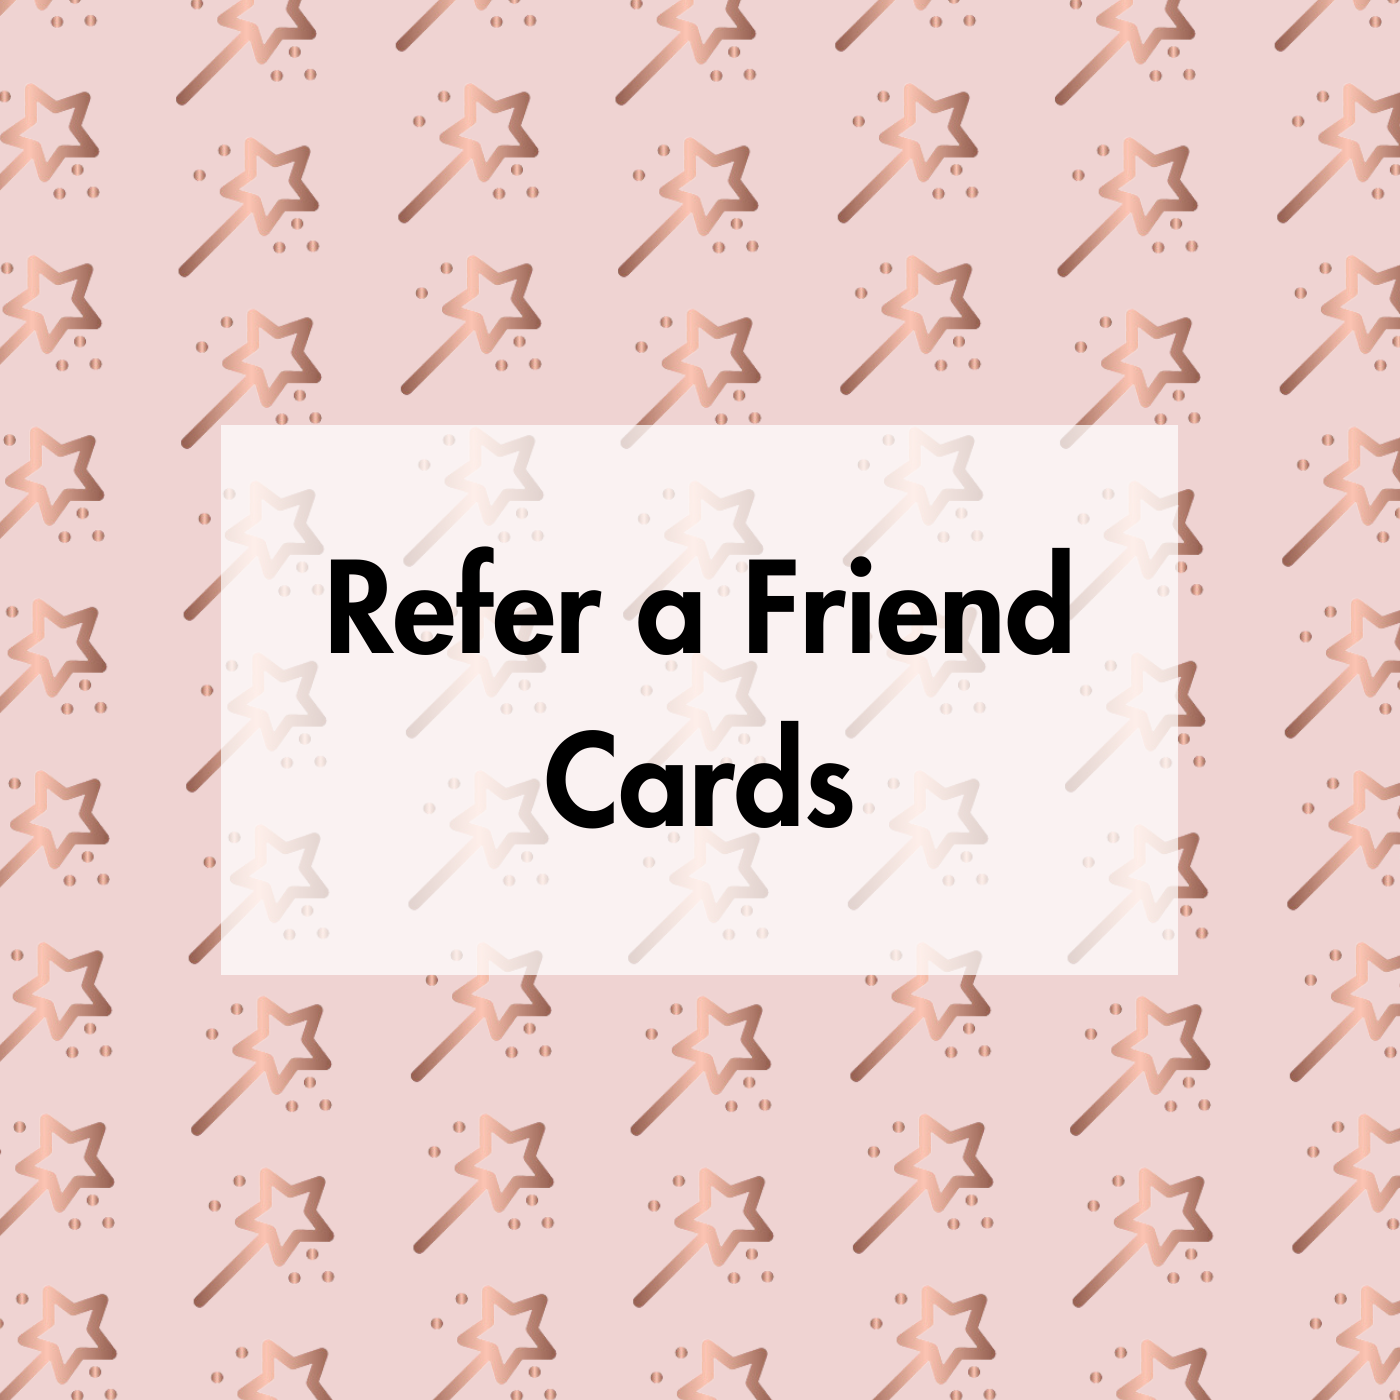 REFER A FRIEND CARDS